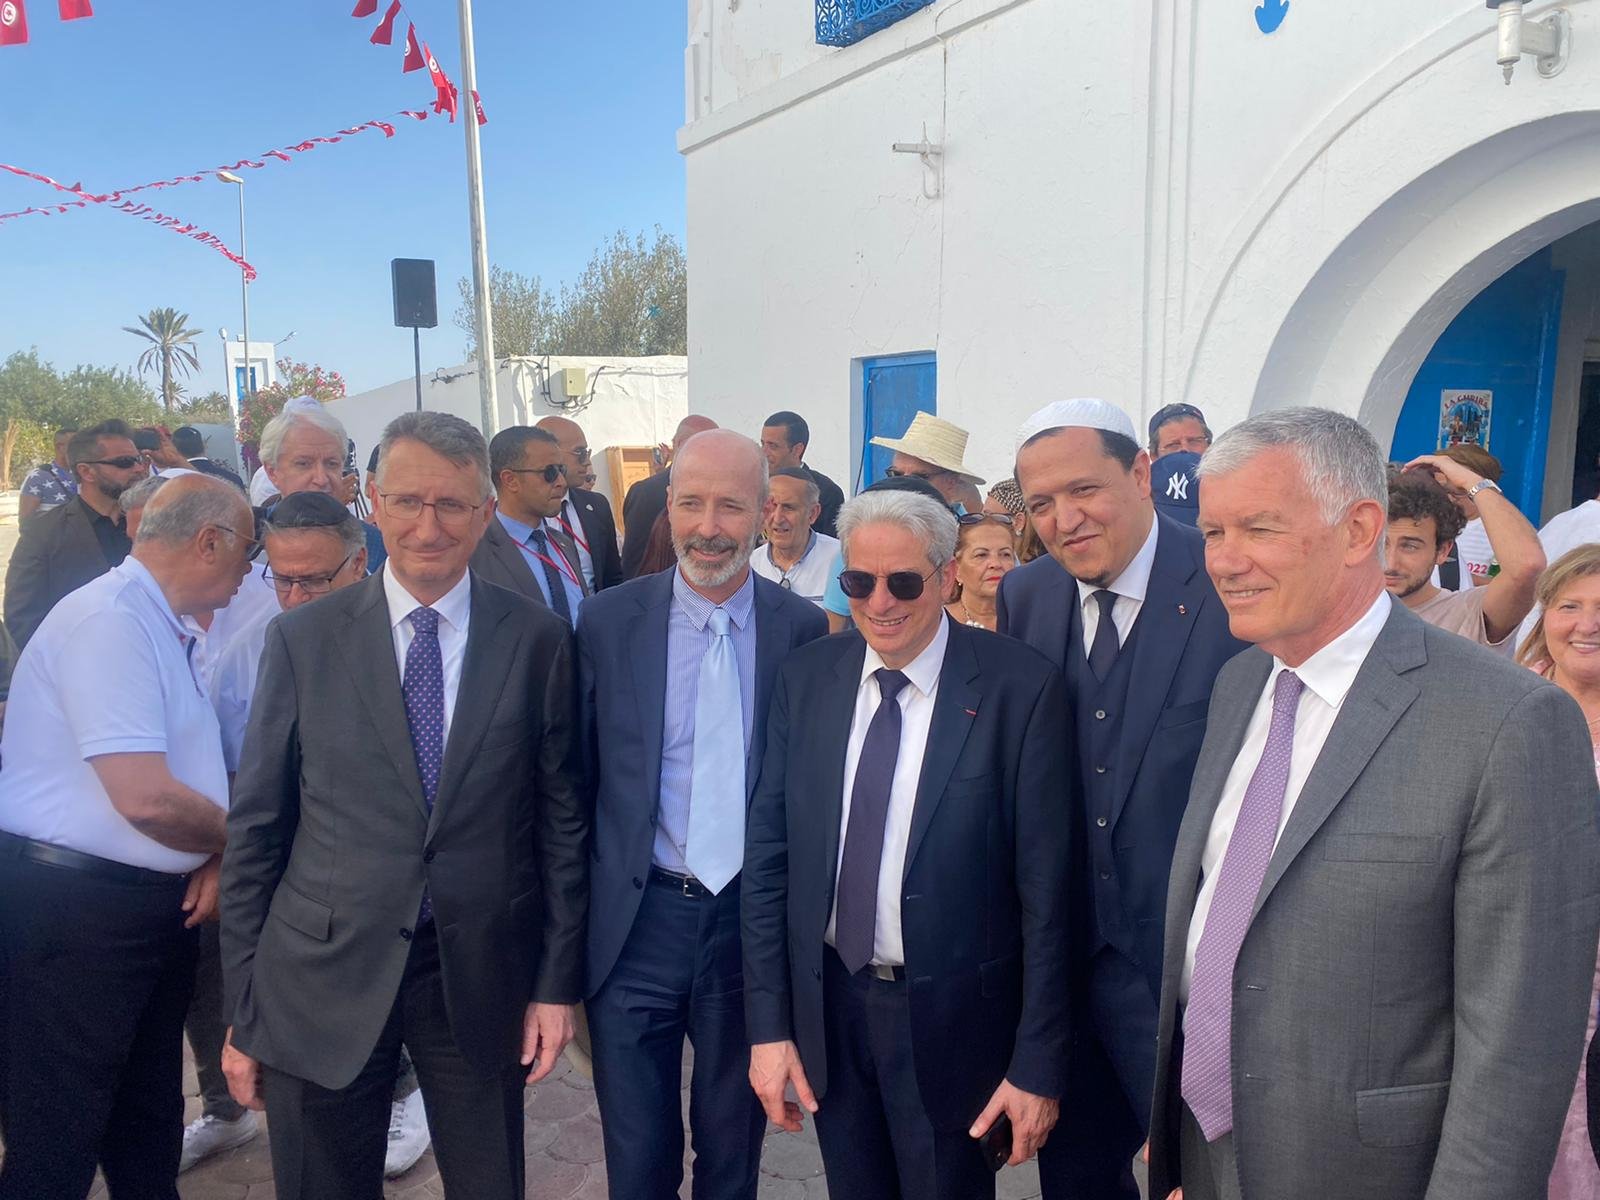 Ambassade de France en Tunisie: L’île de Djerba incarne la paix et la coexistence religieuse